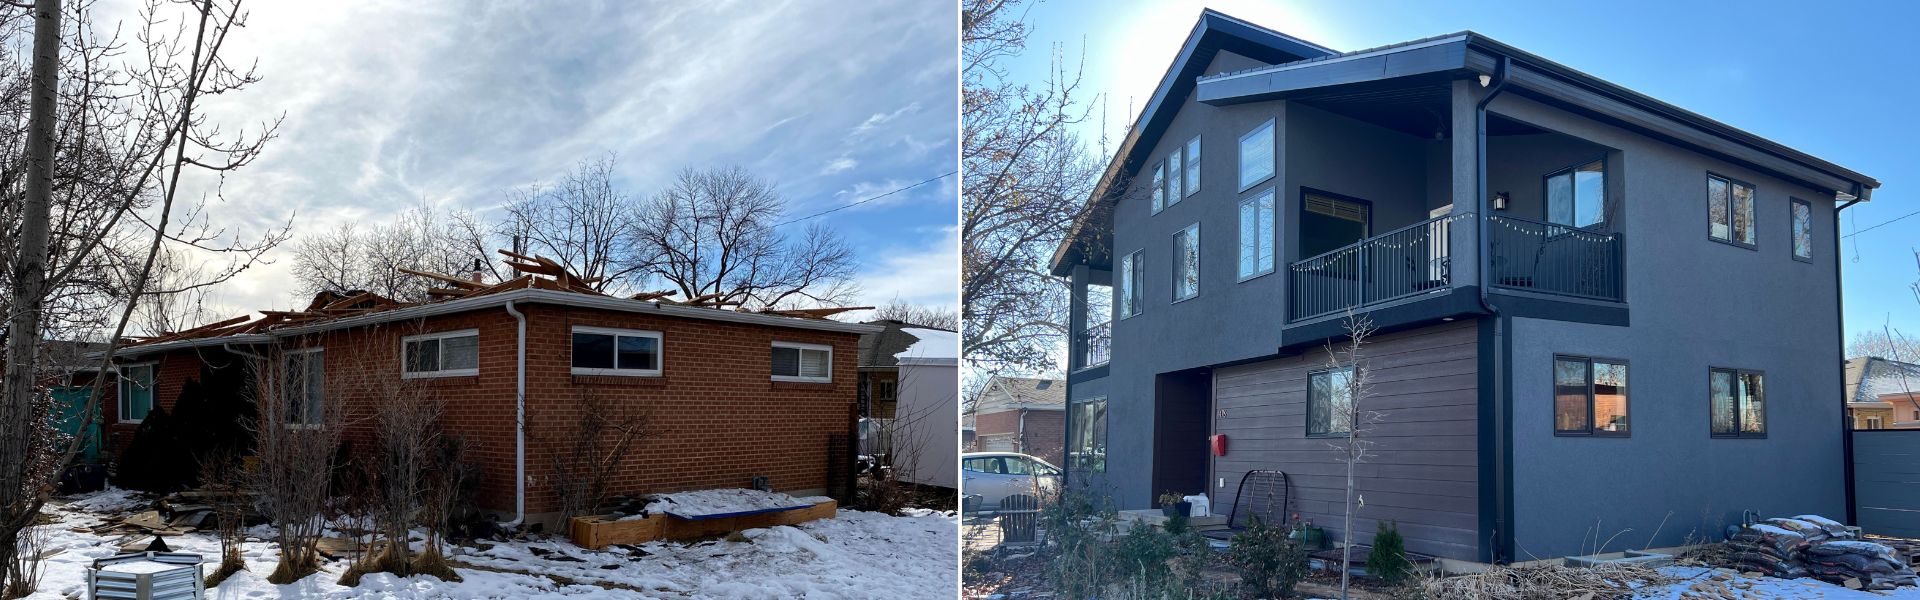 Before After Major New Custom Home Design Build in Salt Lake City Utah by Topp Remodeling & Construction